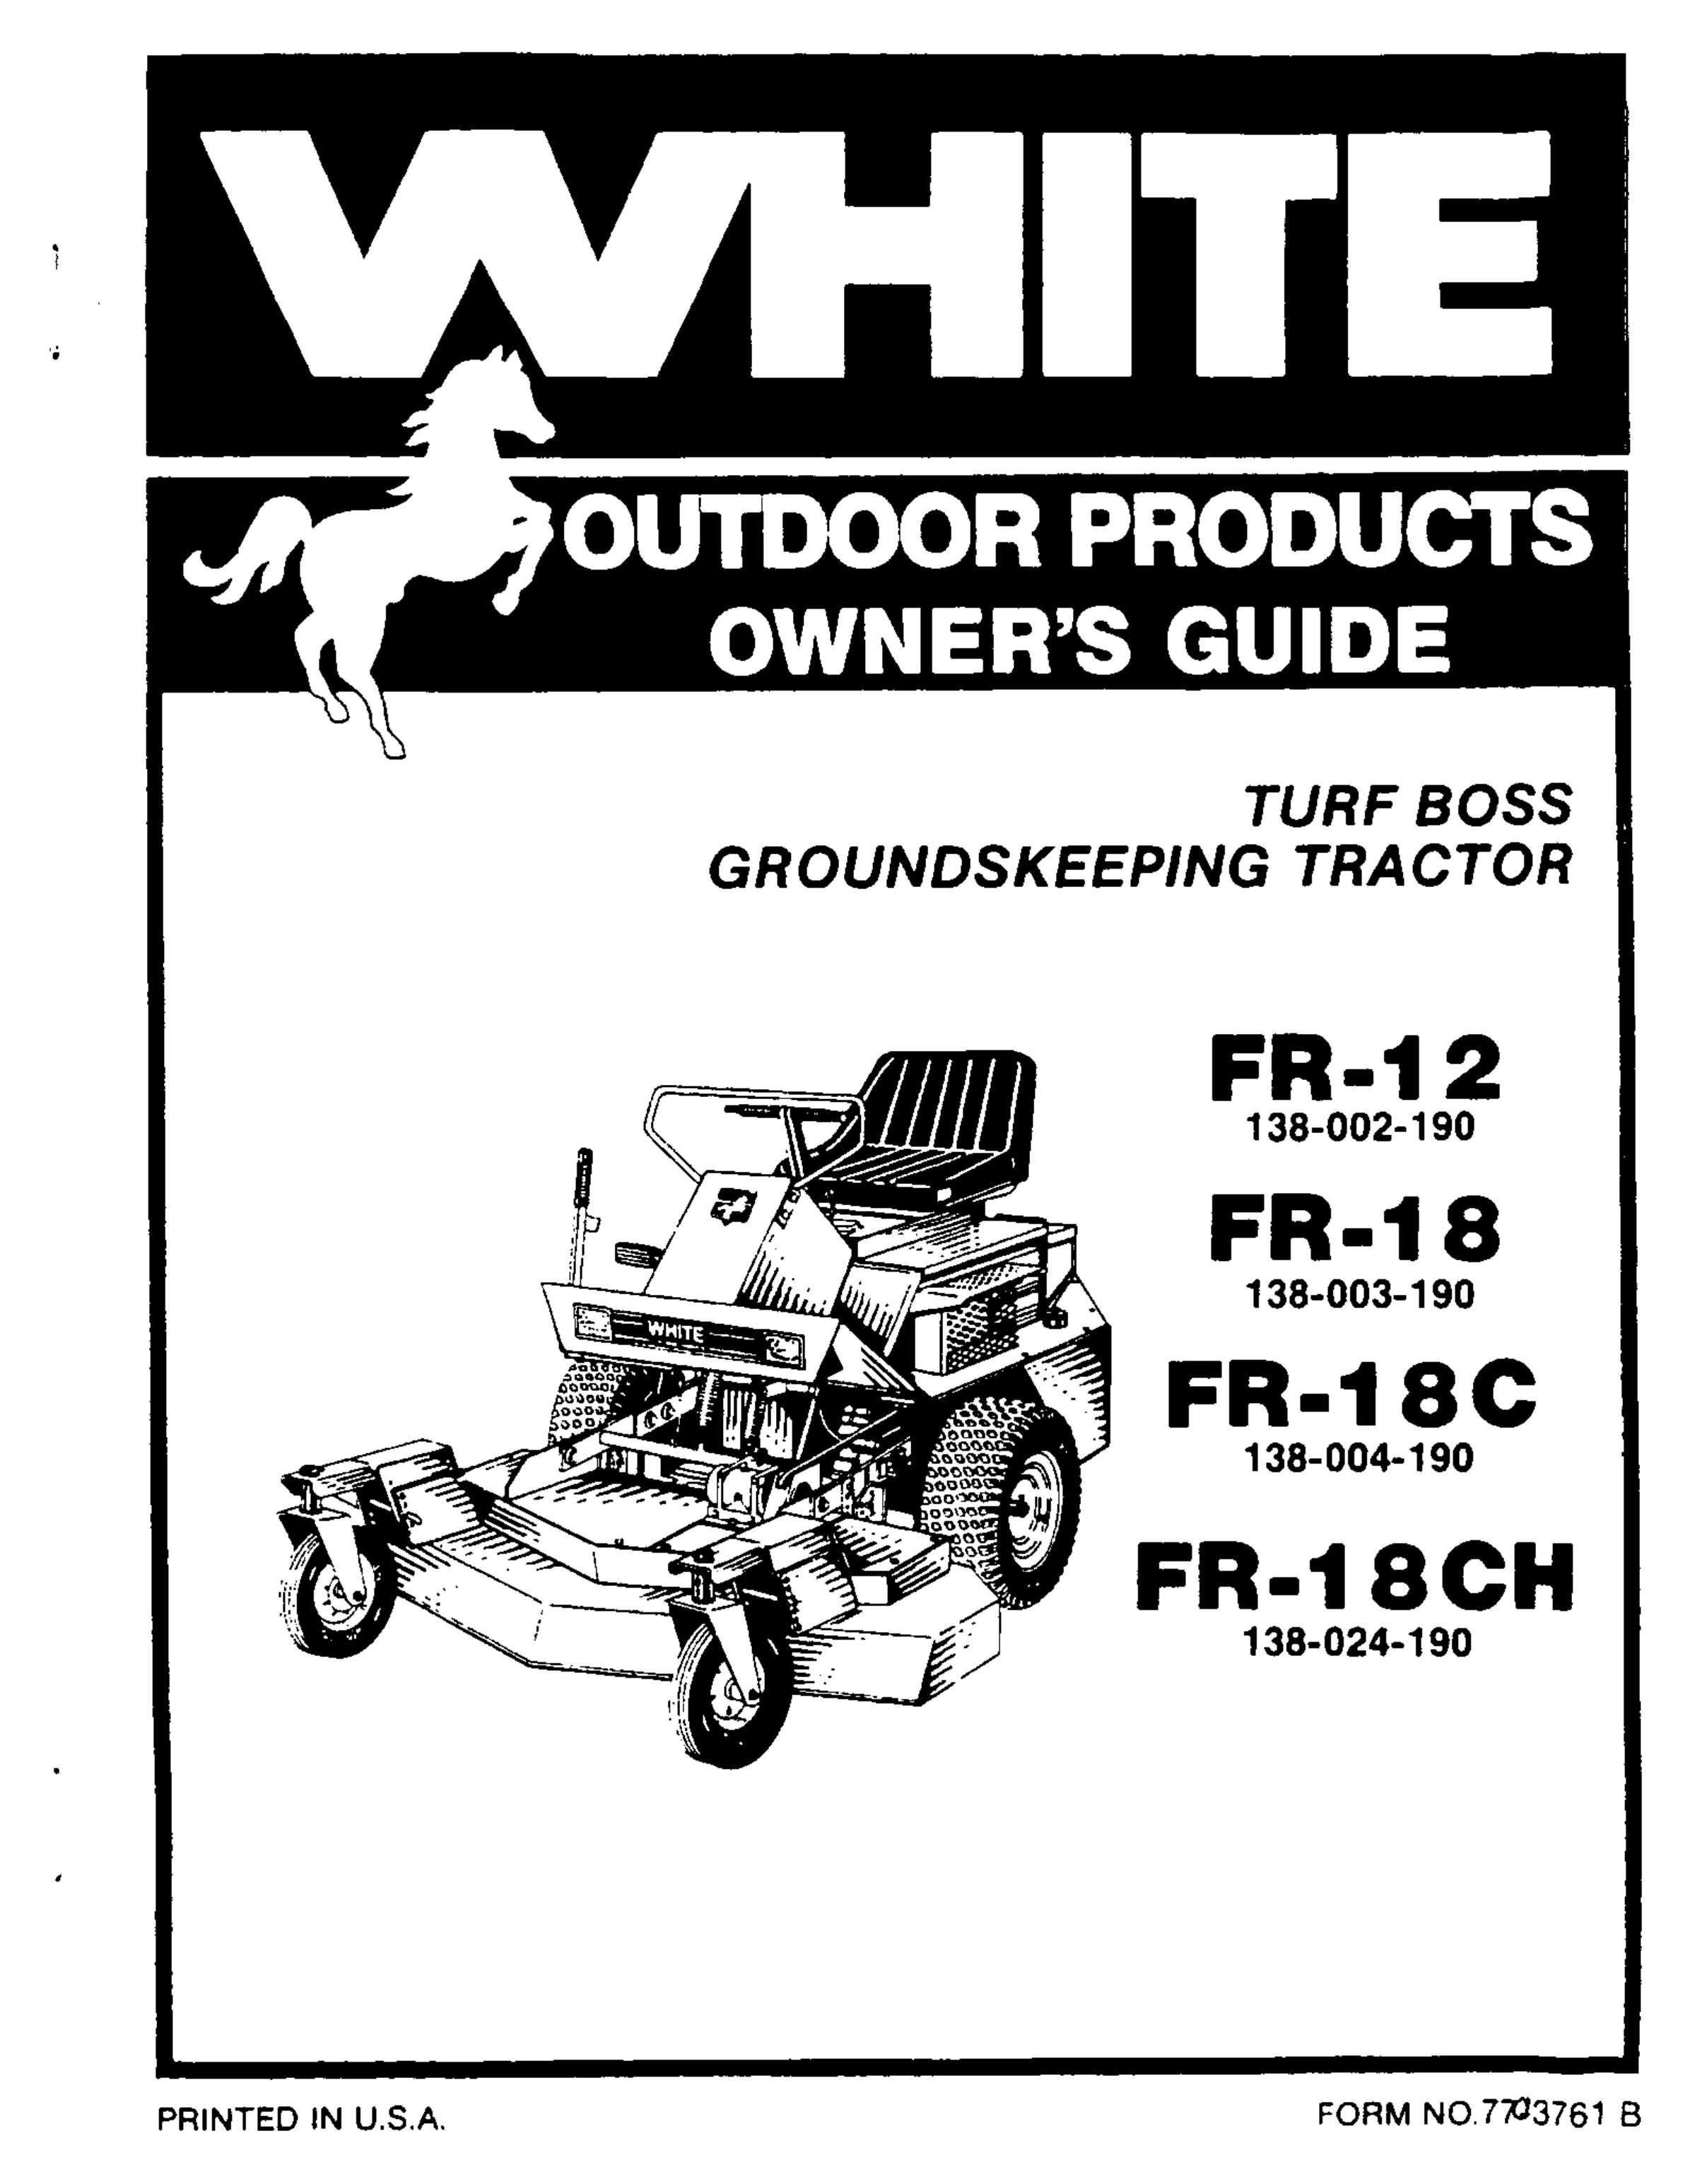 White FR-18 Lawn Mower User Manual